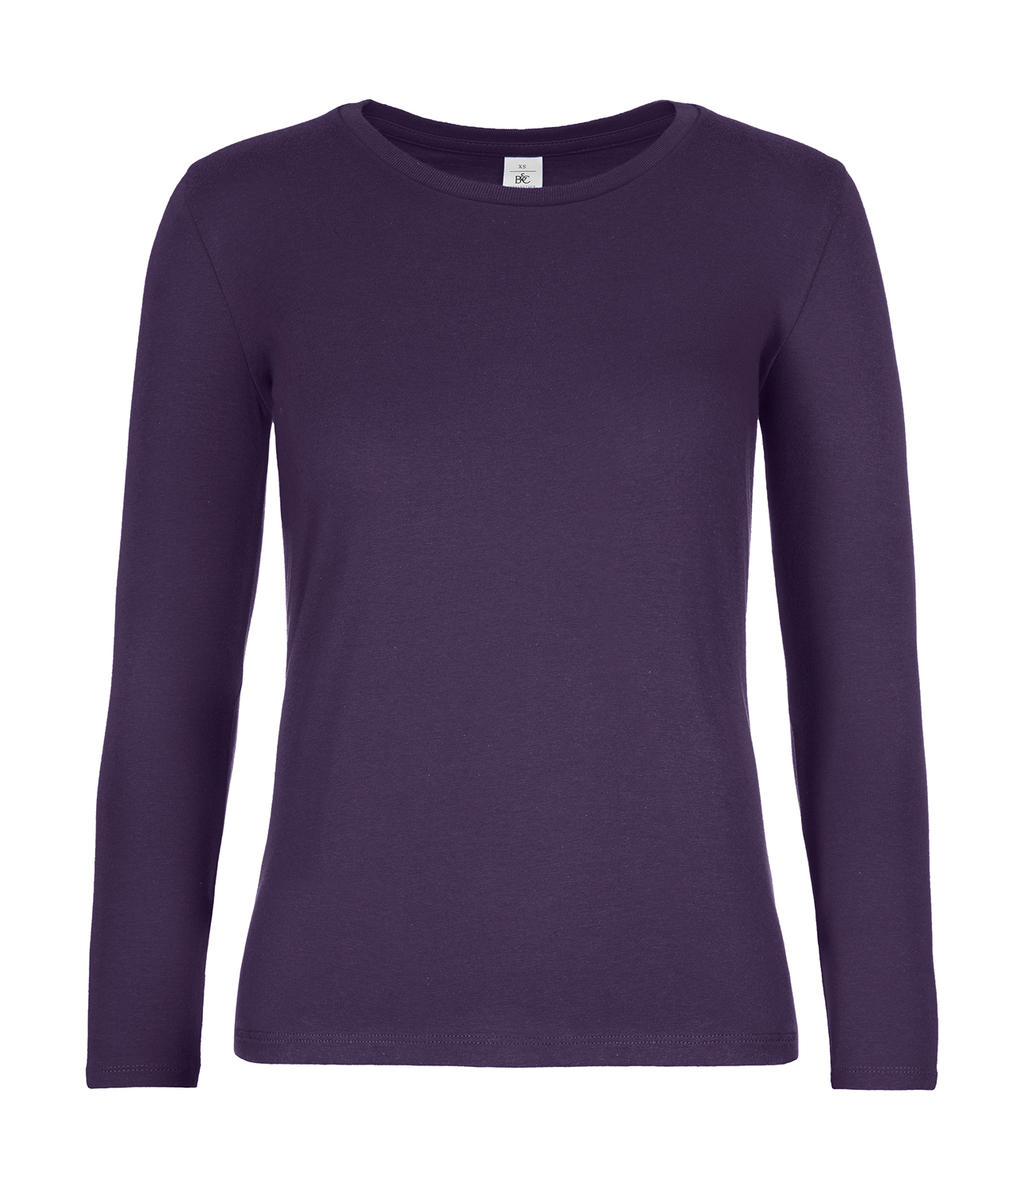 Dámske tričko s dlhými rukávmi #E190 - urban purple